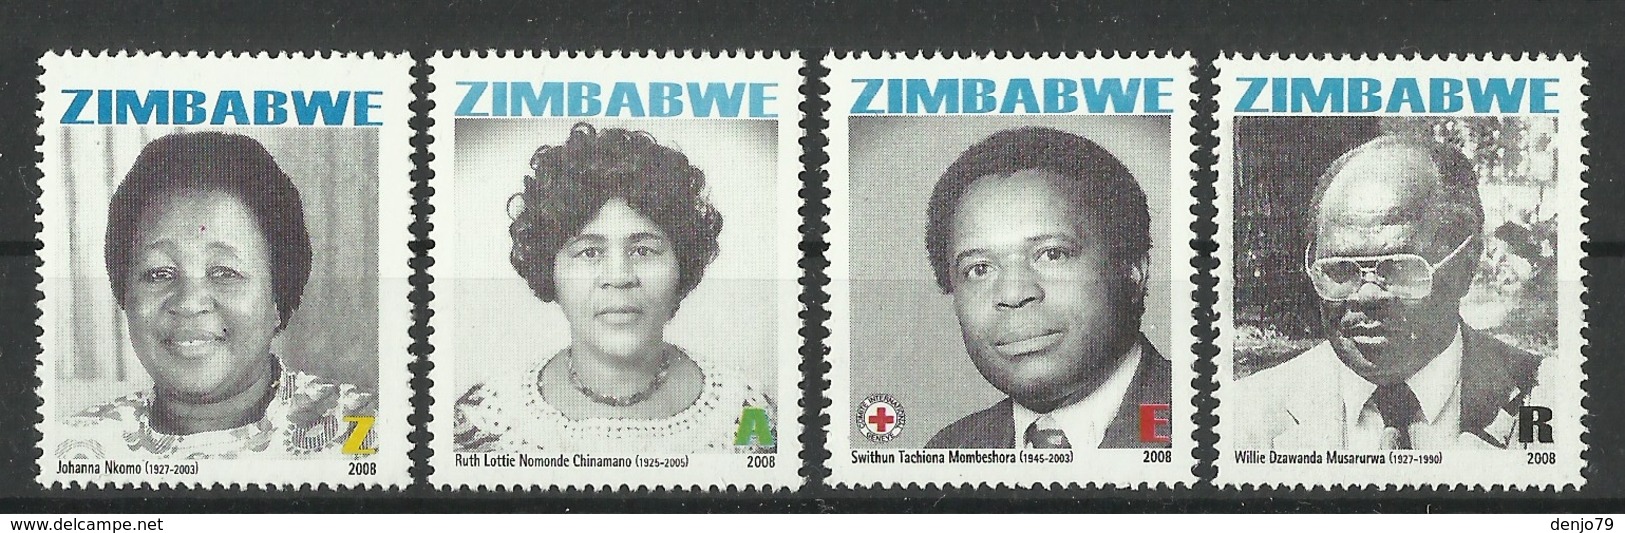 ZIMBABWE 2008 HEROES SET MNH - Zimbabwe (1980-...)